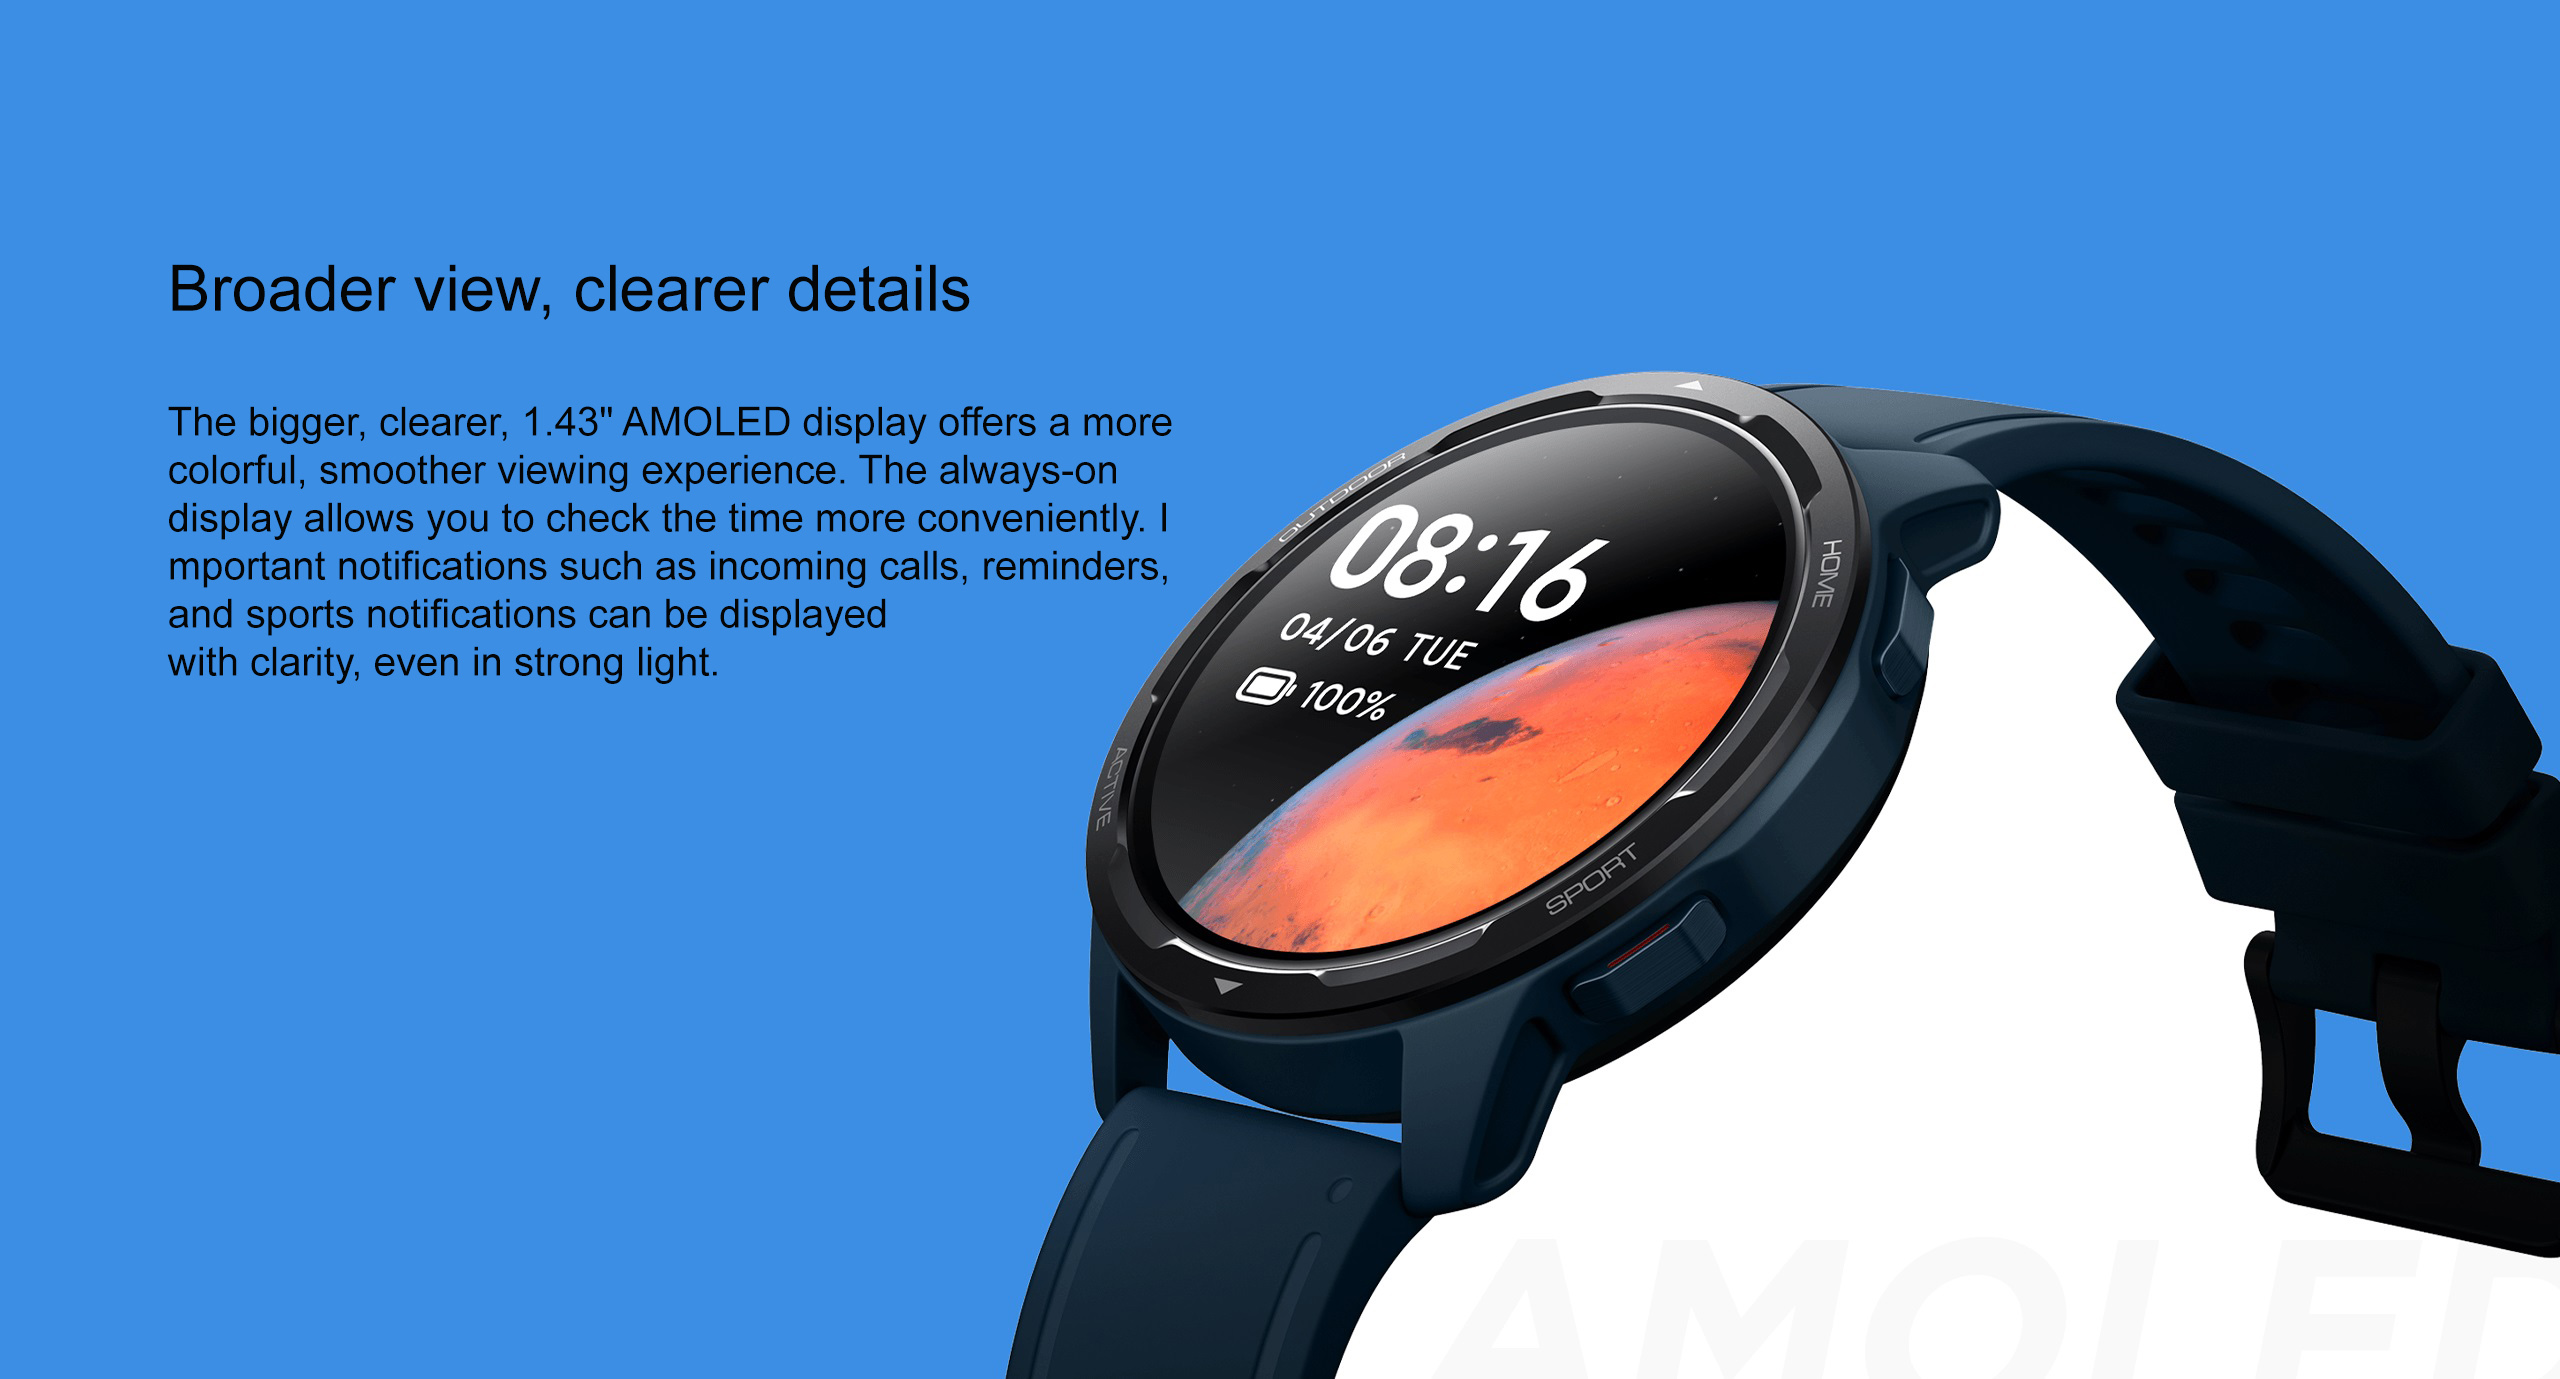 Xiaomi Watch | mi smart watch
